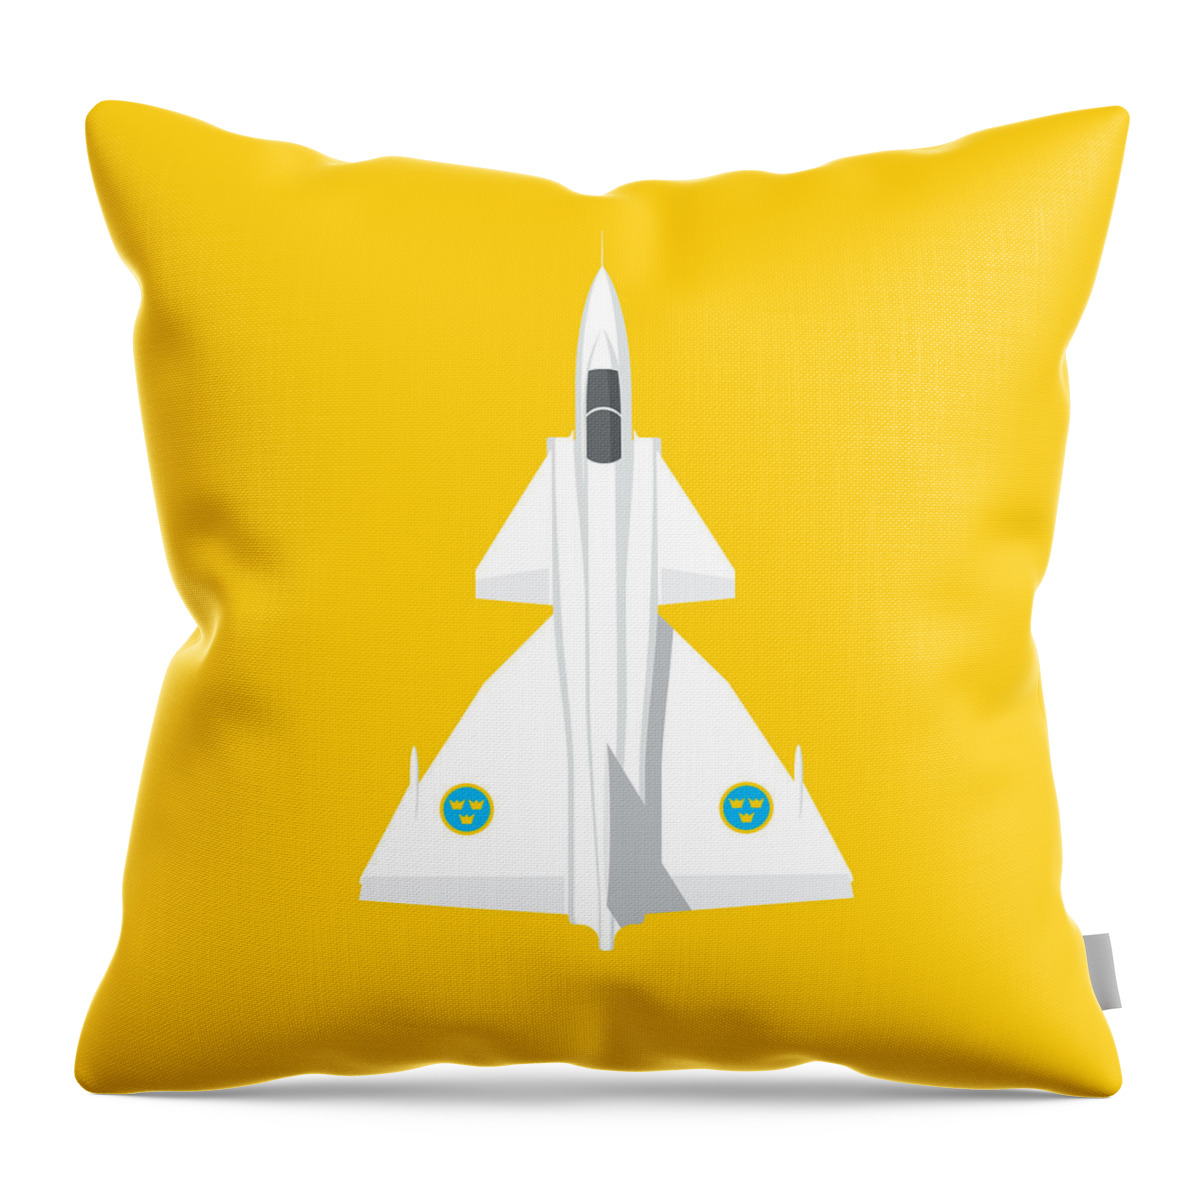 Viggen Throw Pillow featuring the digital art J37 Viggen Jet Aircraft - Yellow by Organic Synthesis